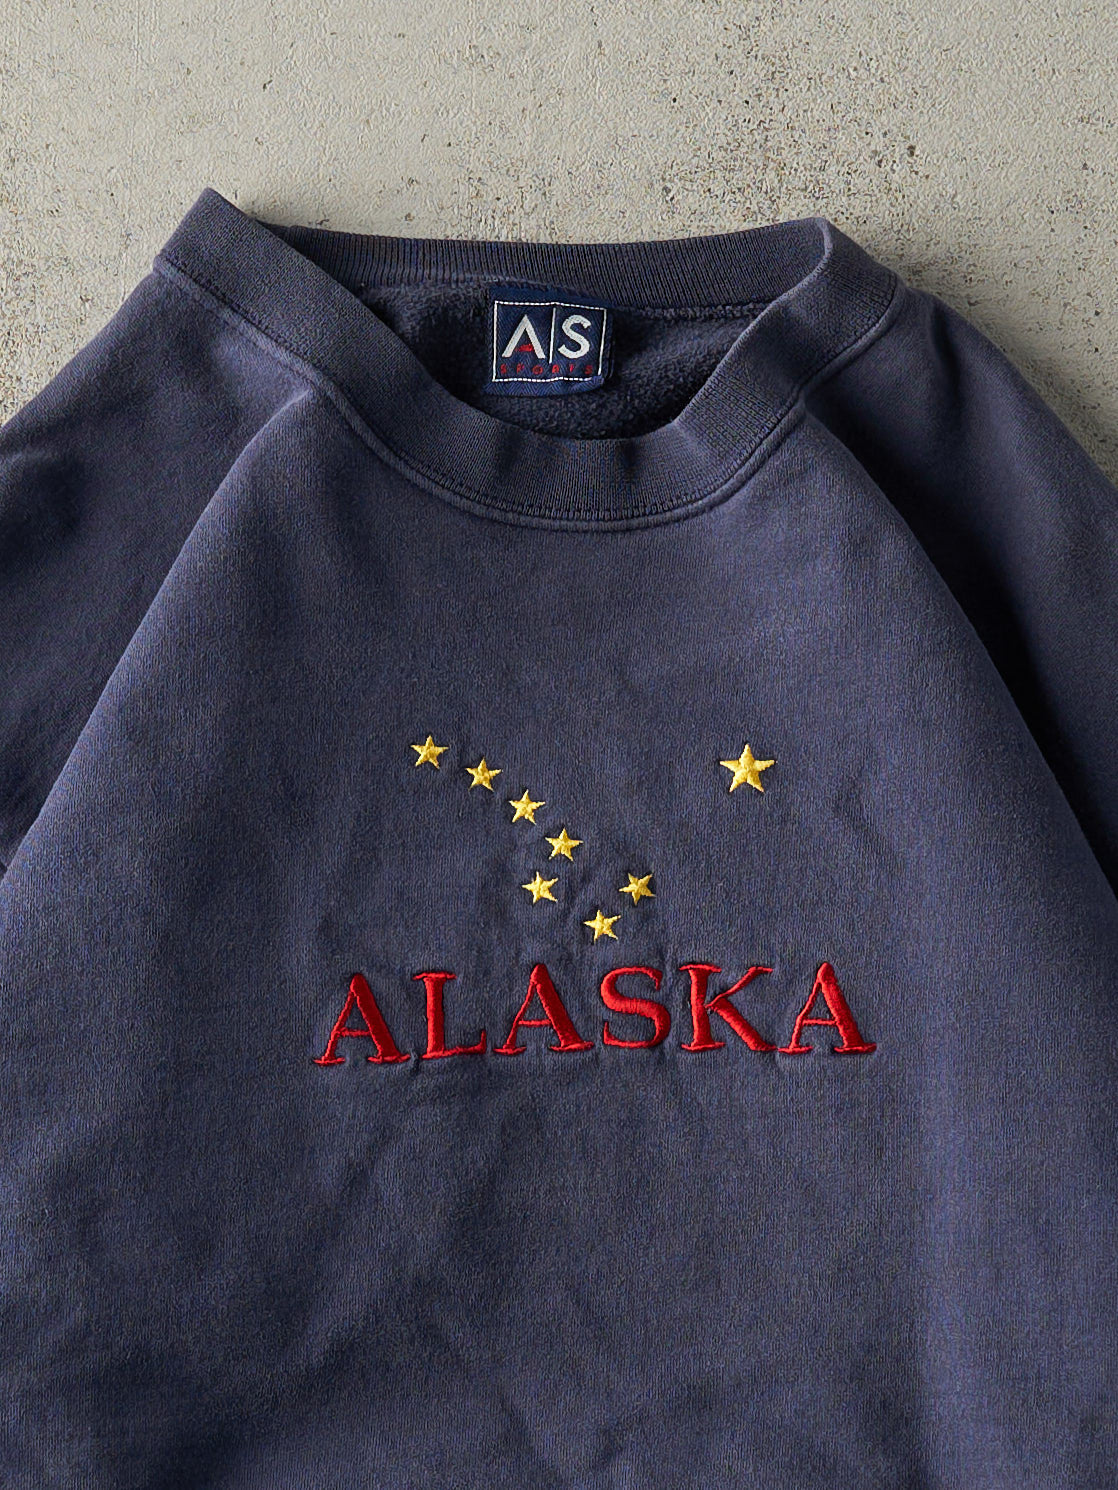 Vintage 90s Navy Blue Embroidered Alaska Boxy Crewneck (L)